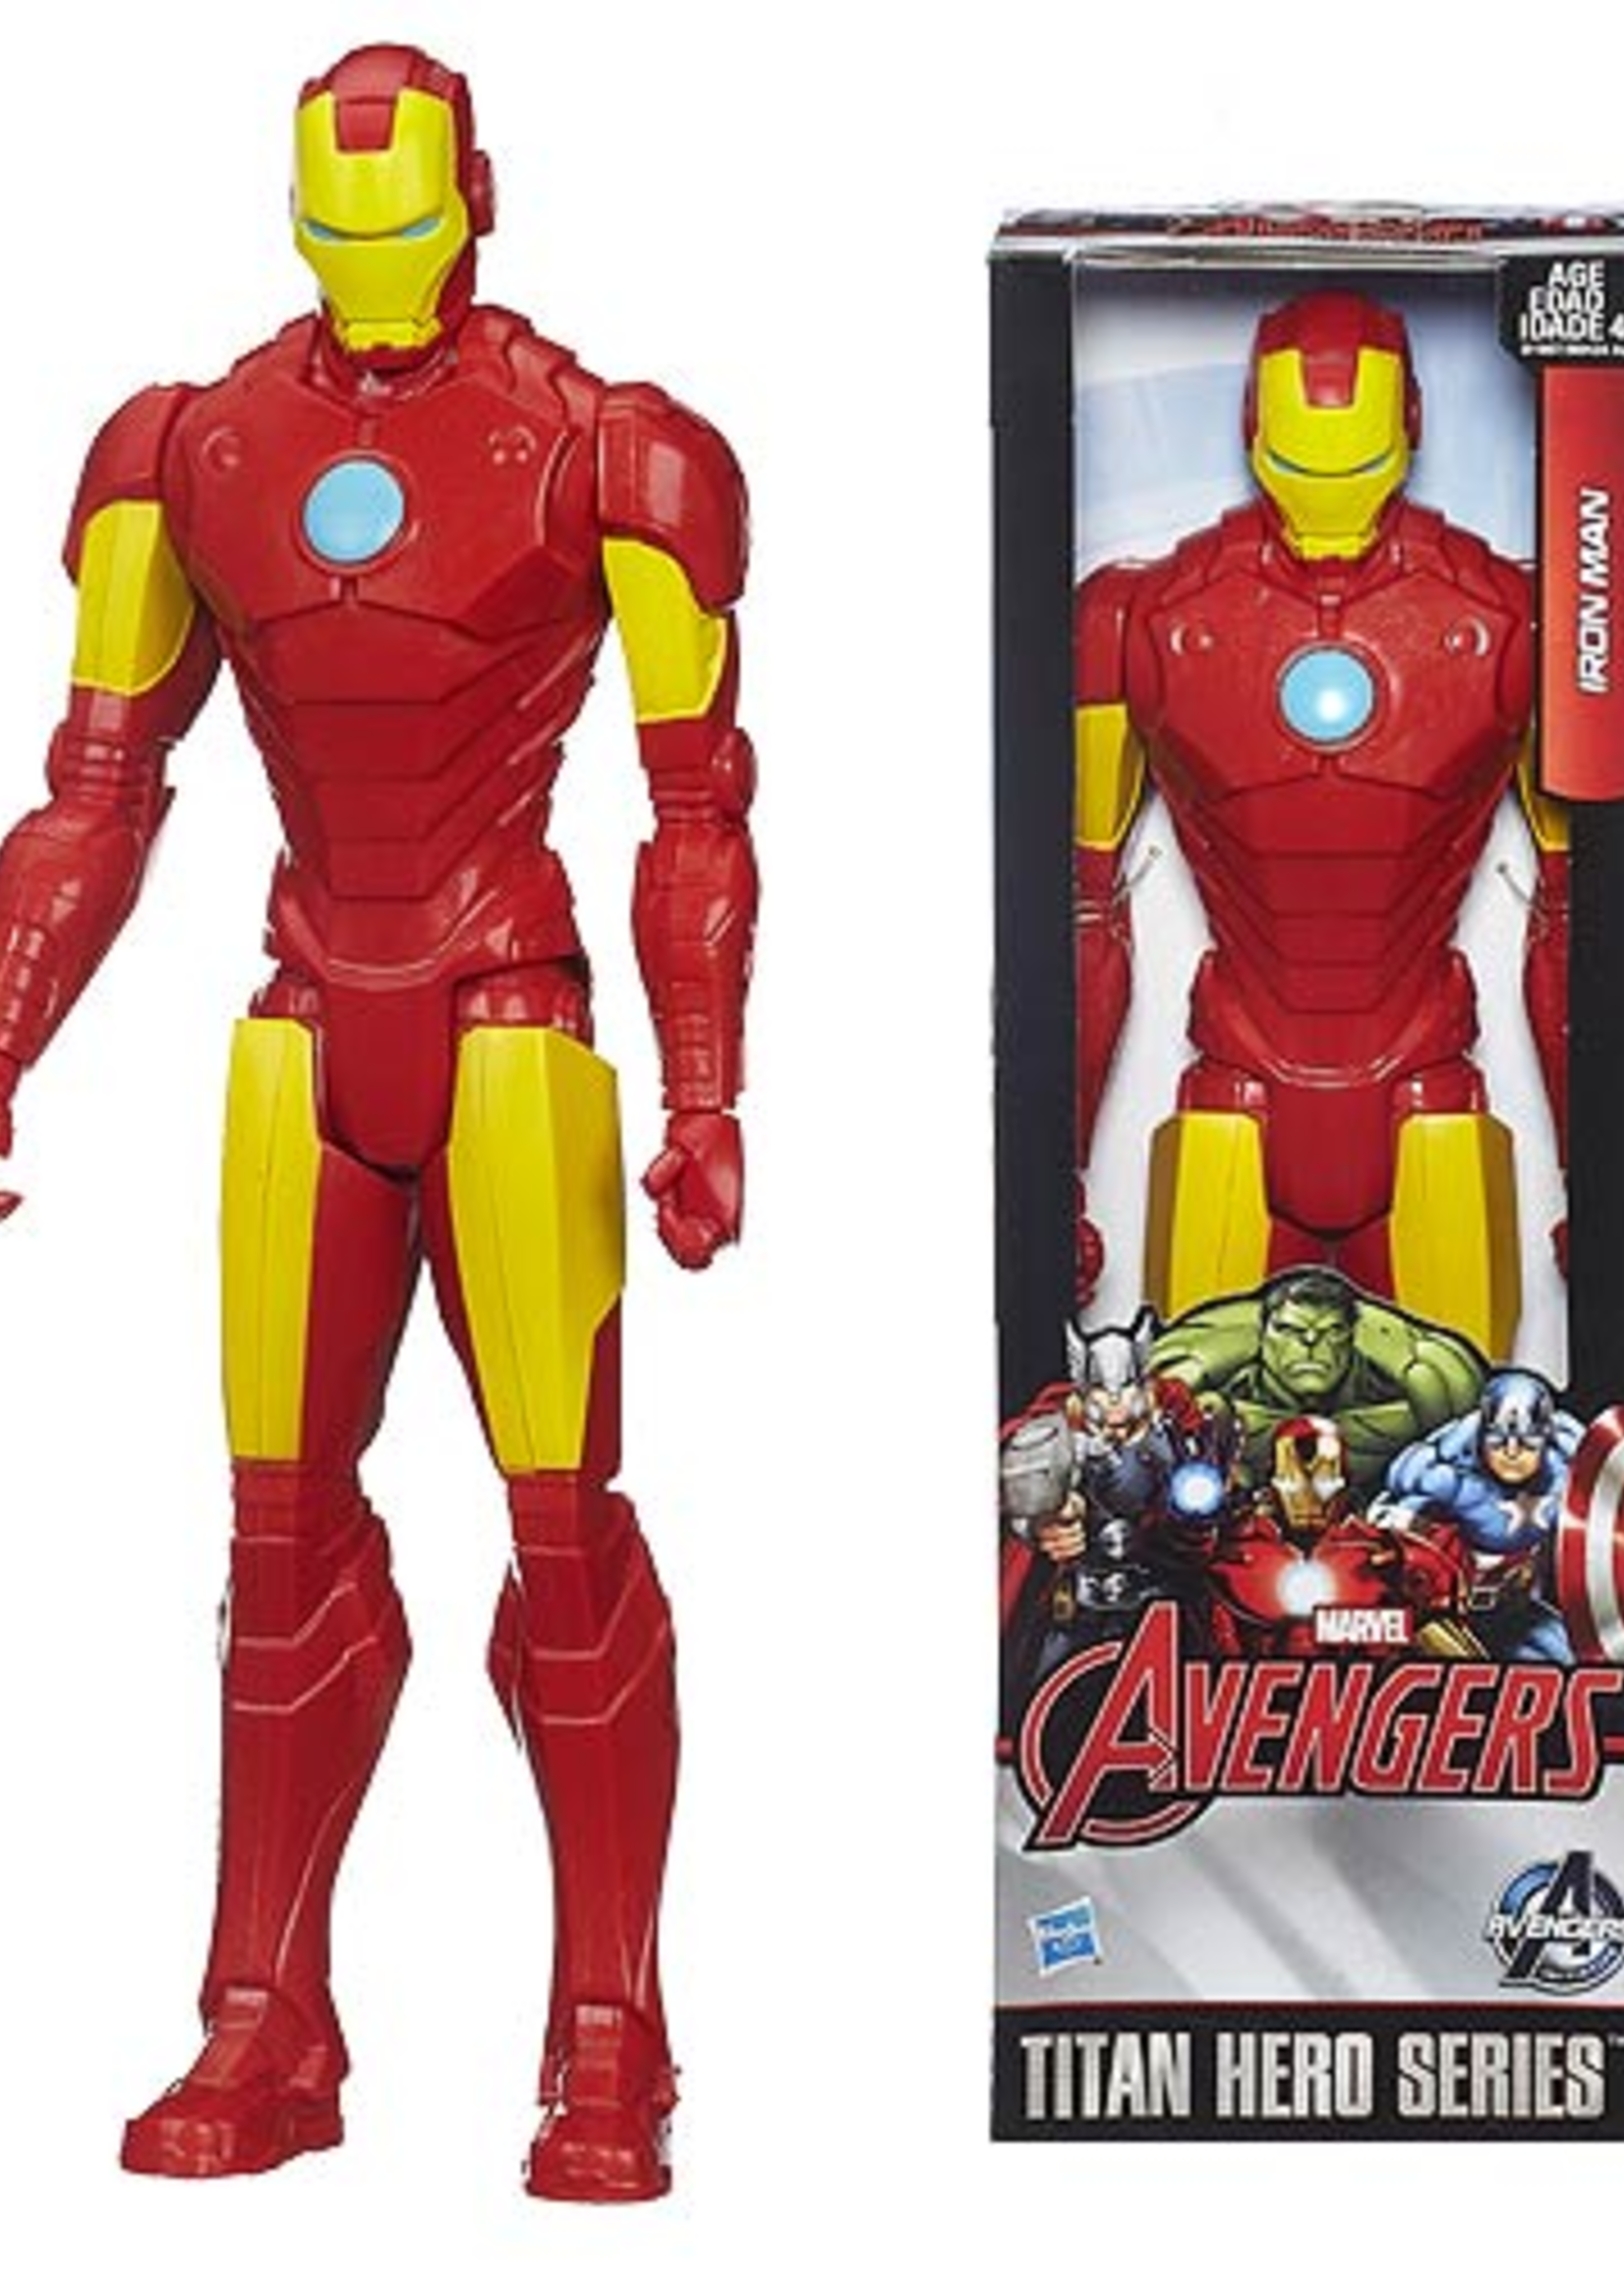 Hasbro Avengers - Titan hero series - Iron man